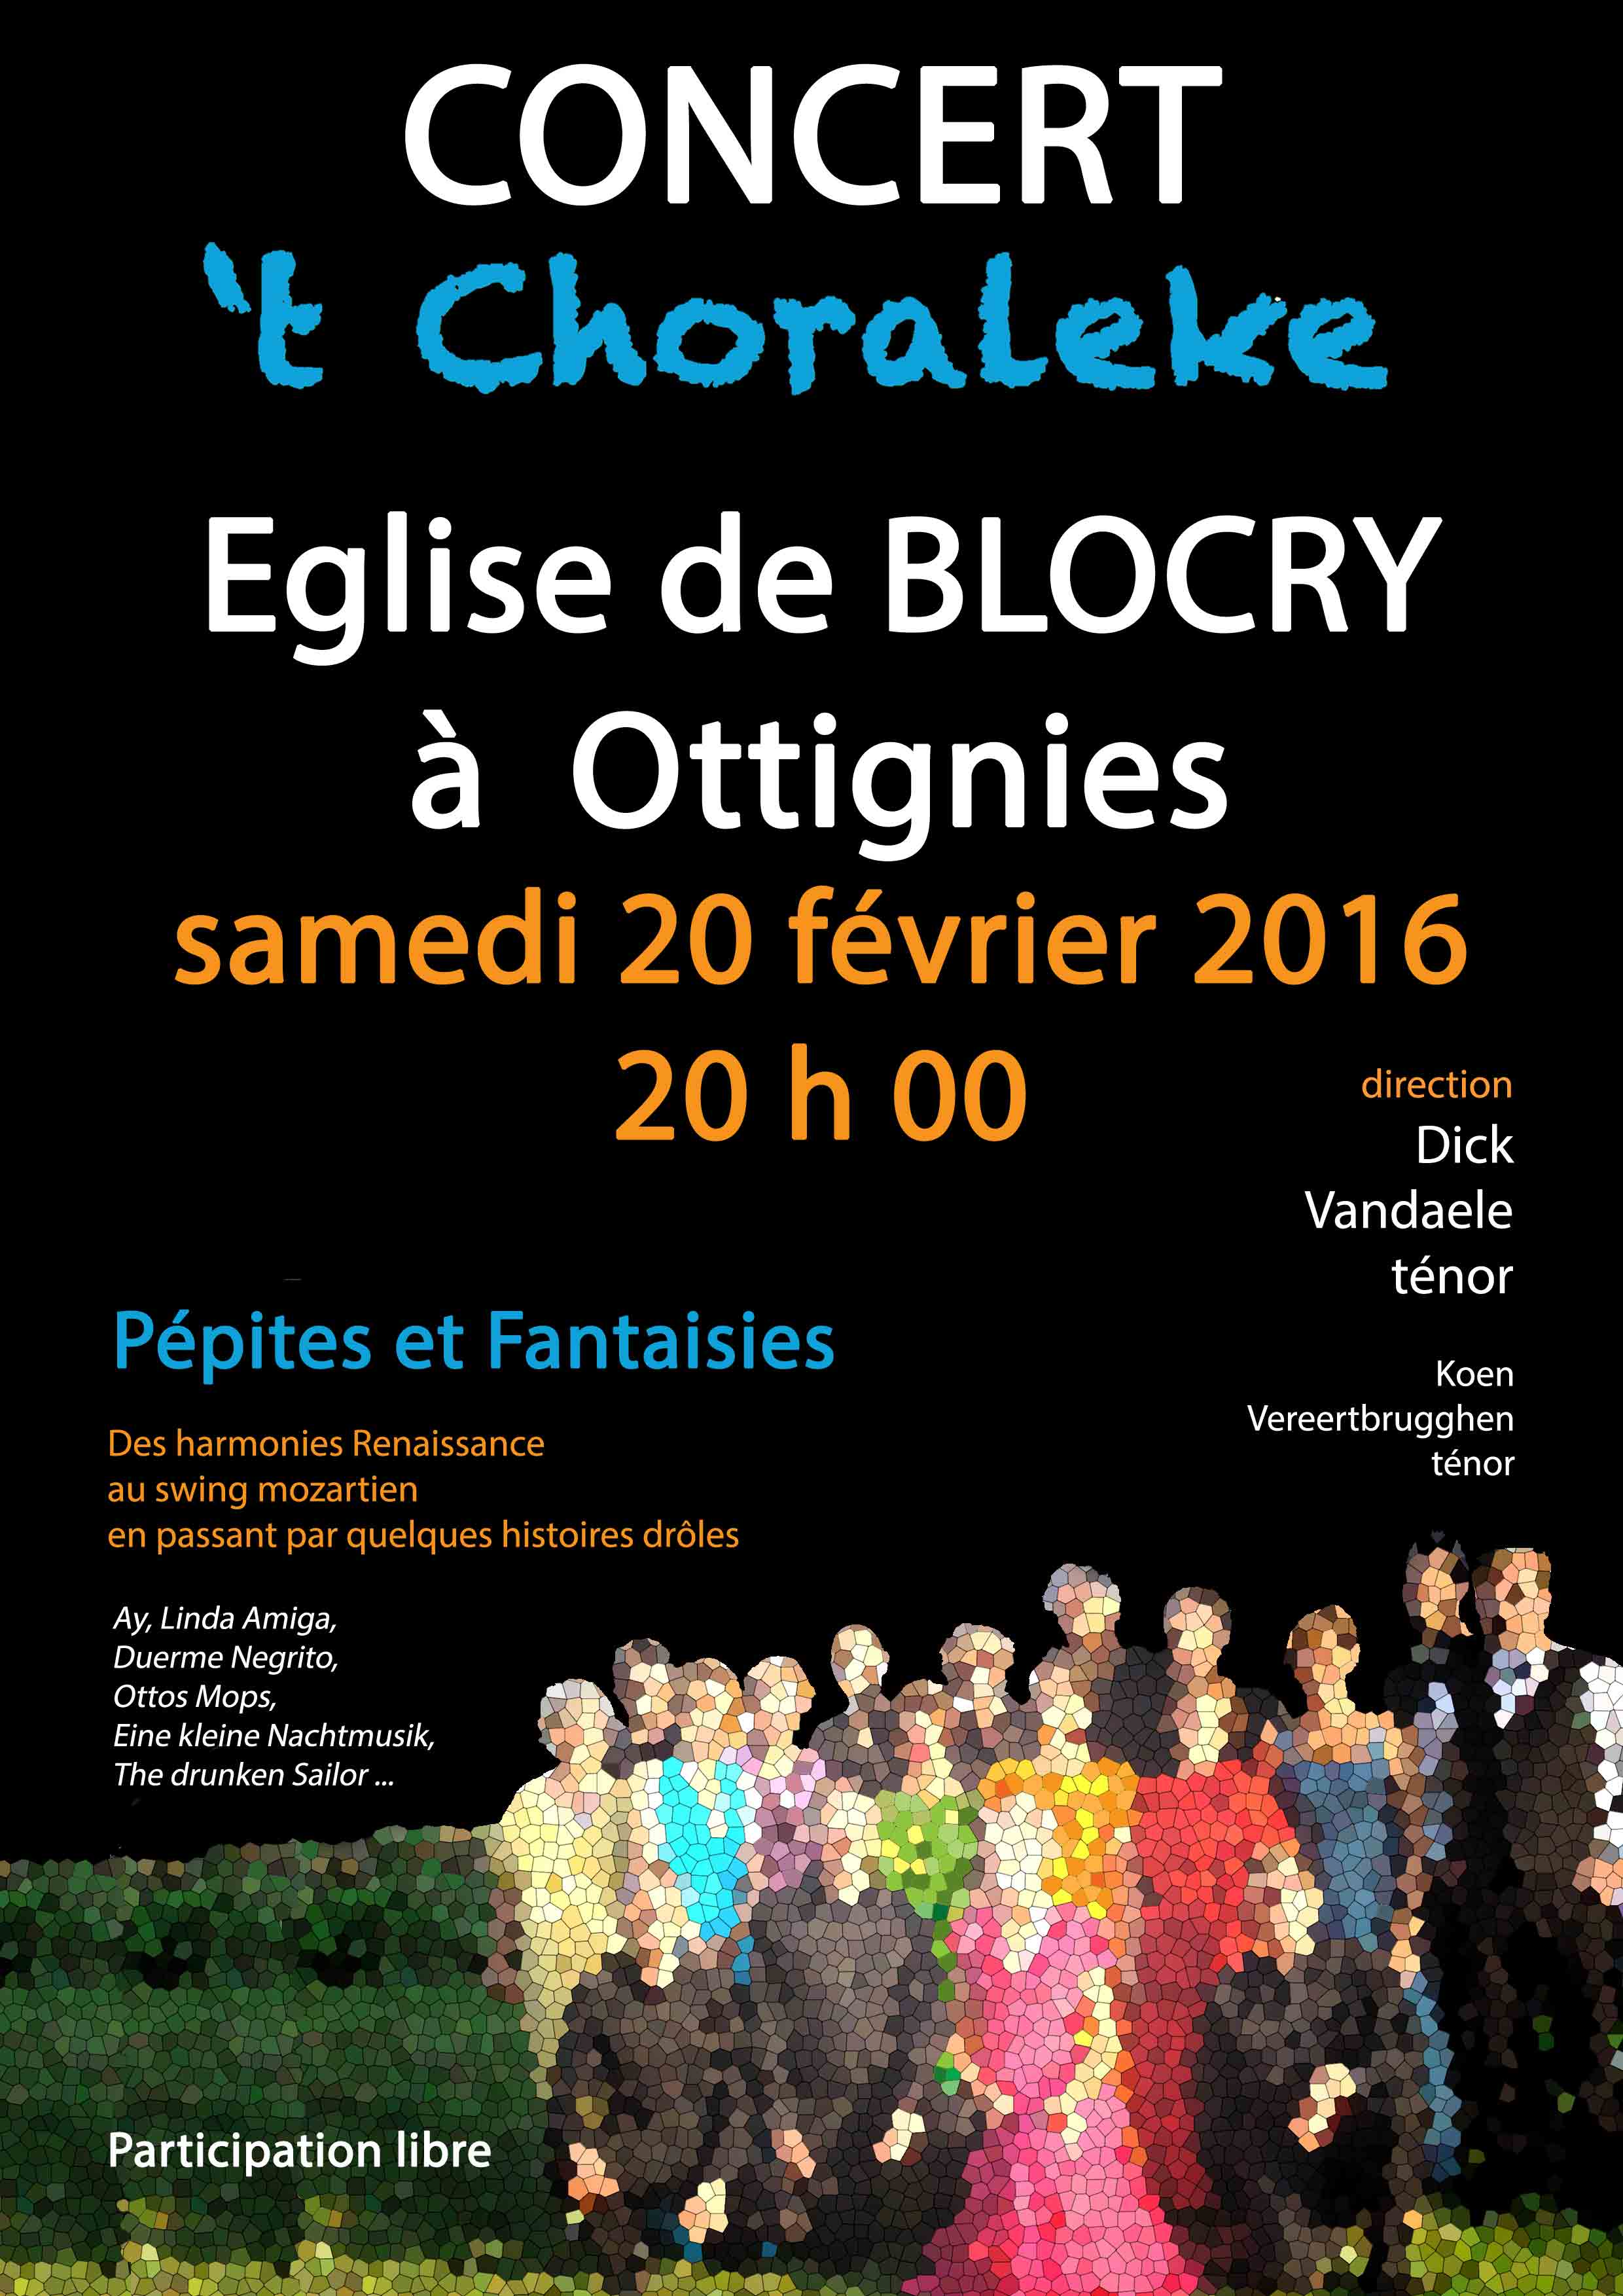 tchoraleke - concert Blocry 2016 affiche